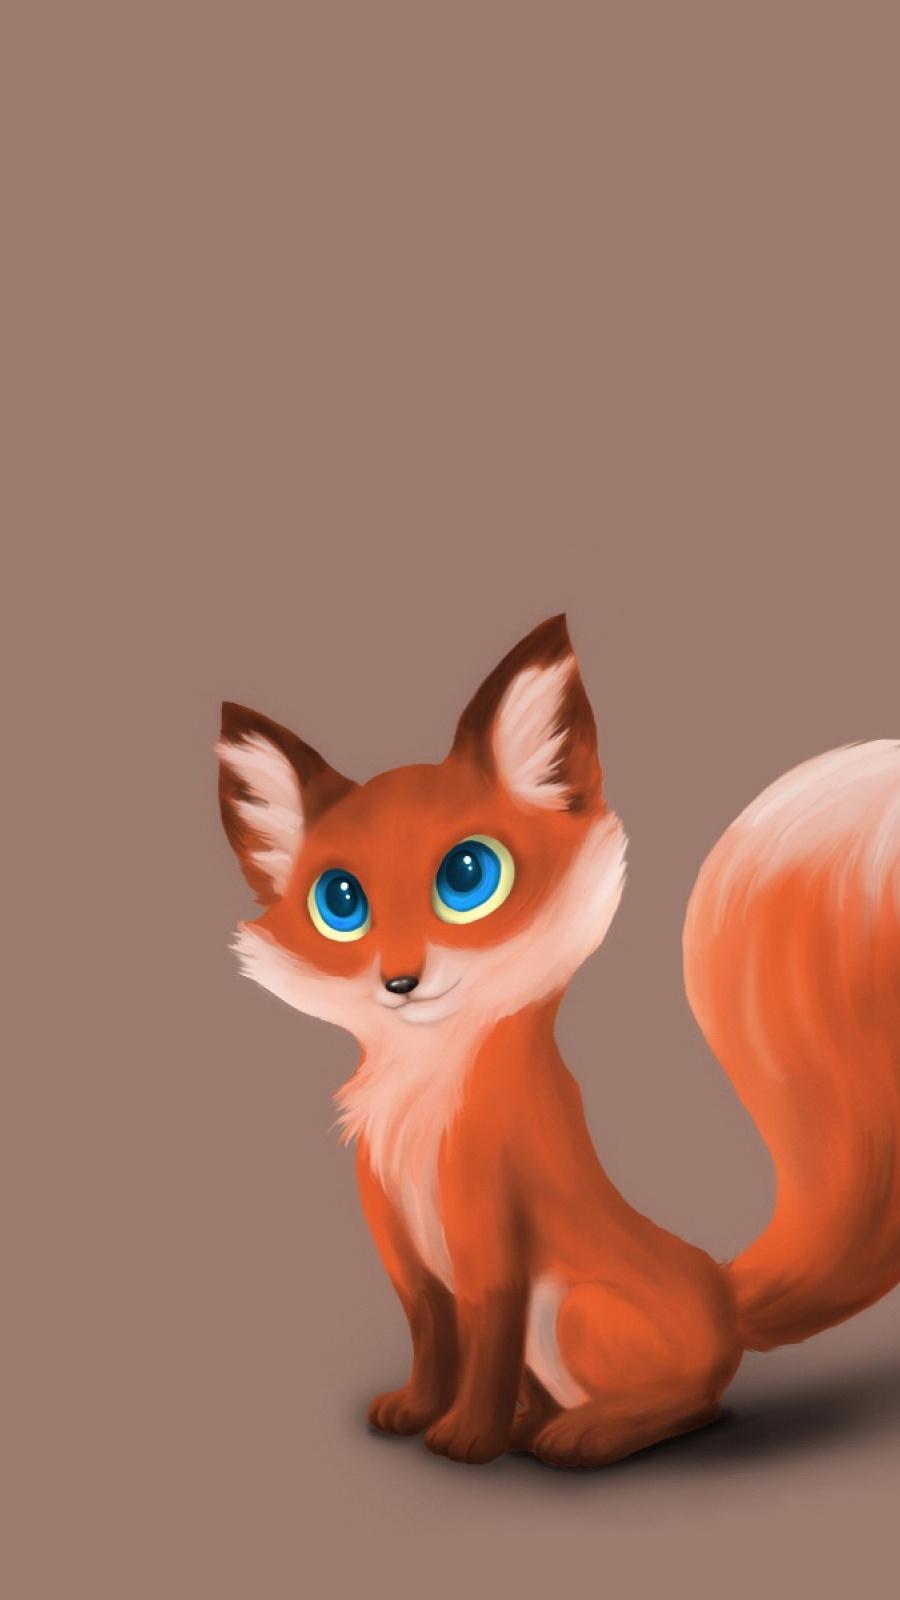 Red Fox Mobile Wallpaper